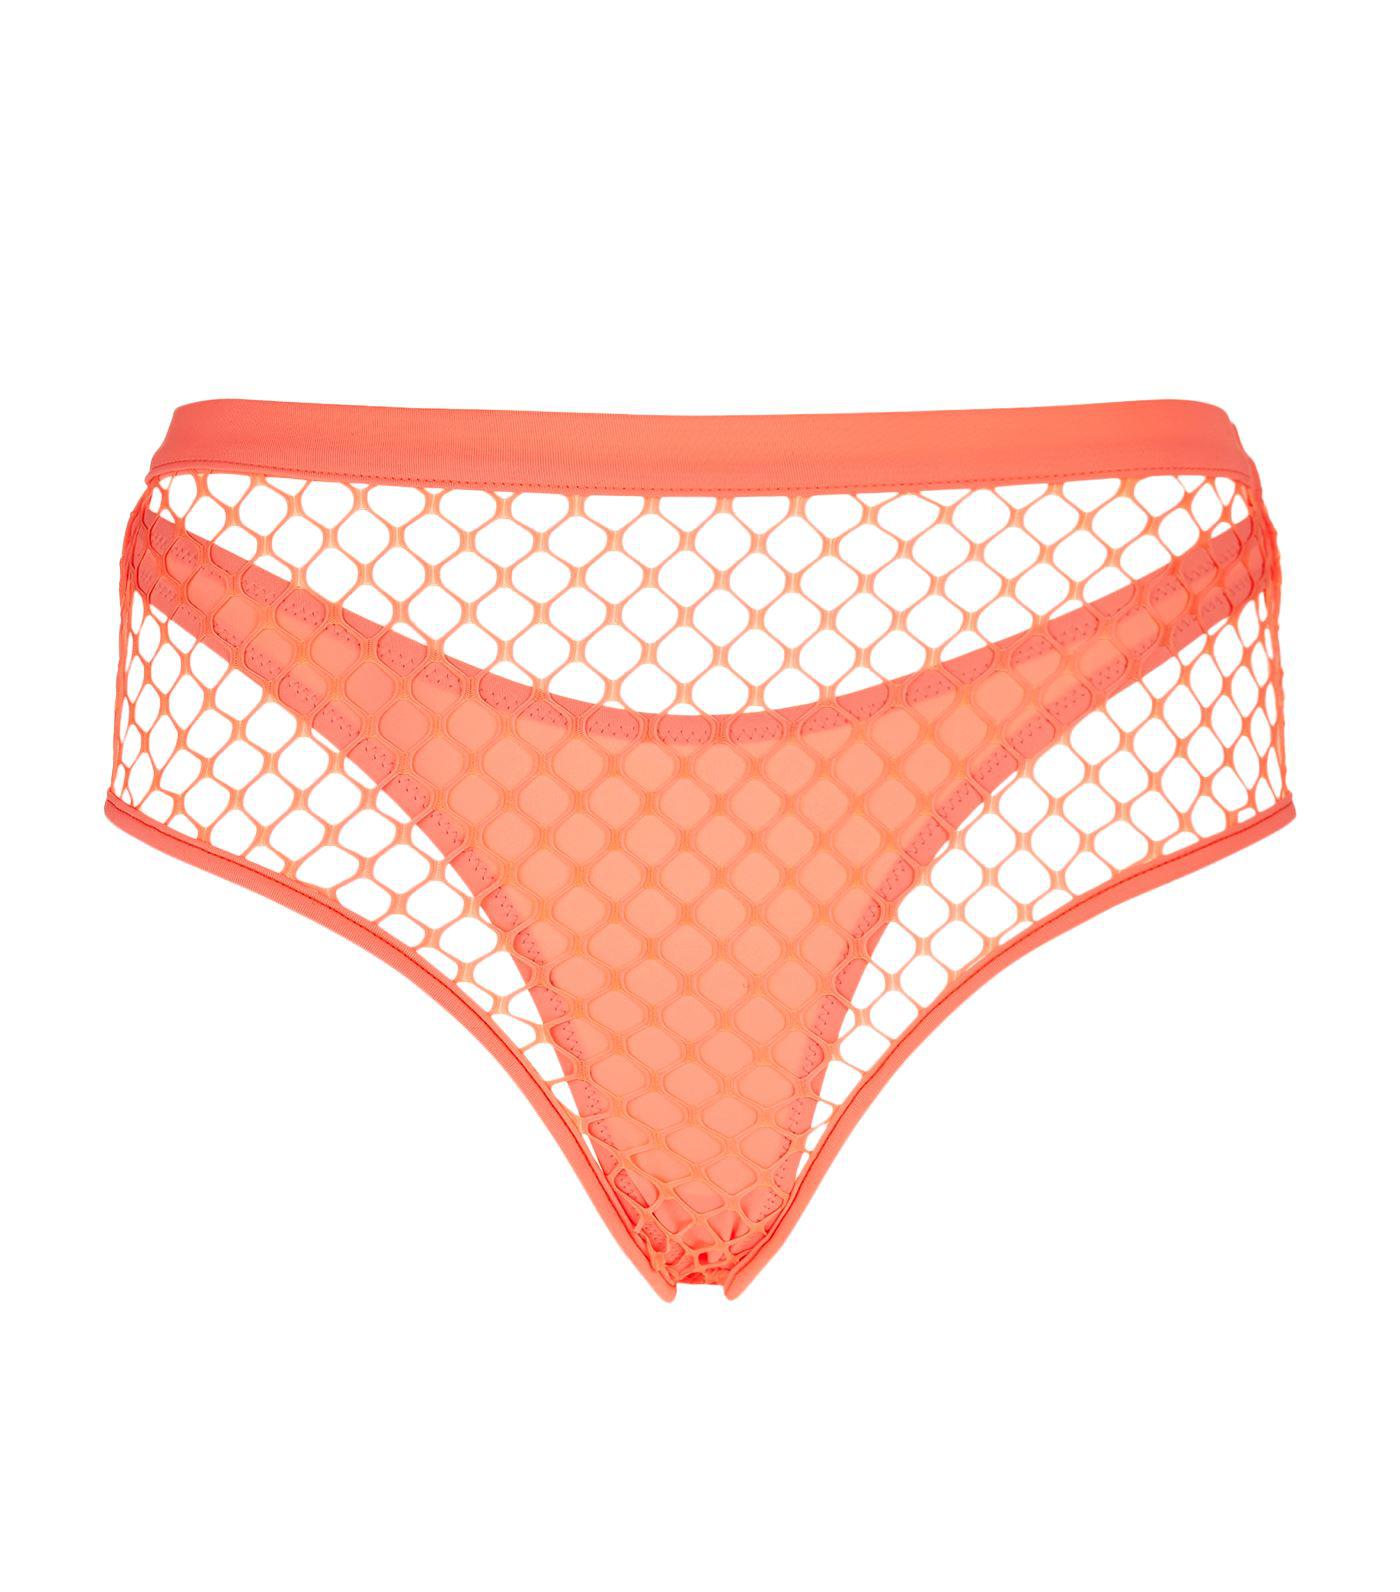 Agent Provocateur Synthetic Shannon Fishnet Bikini Briefs in Orange | Lyst